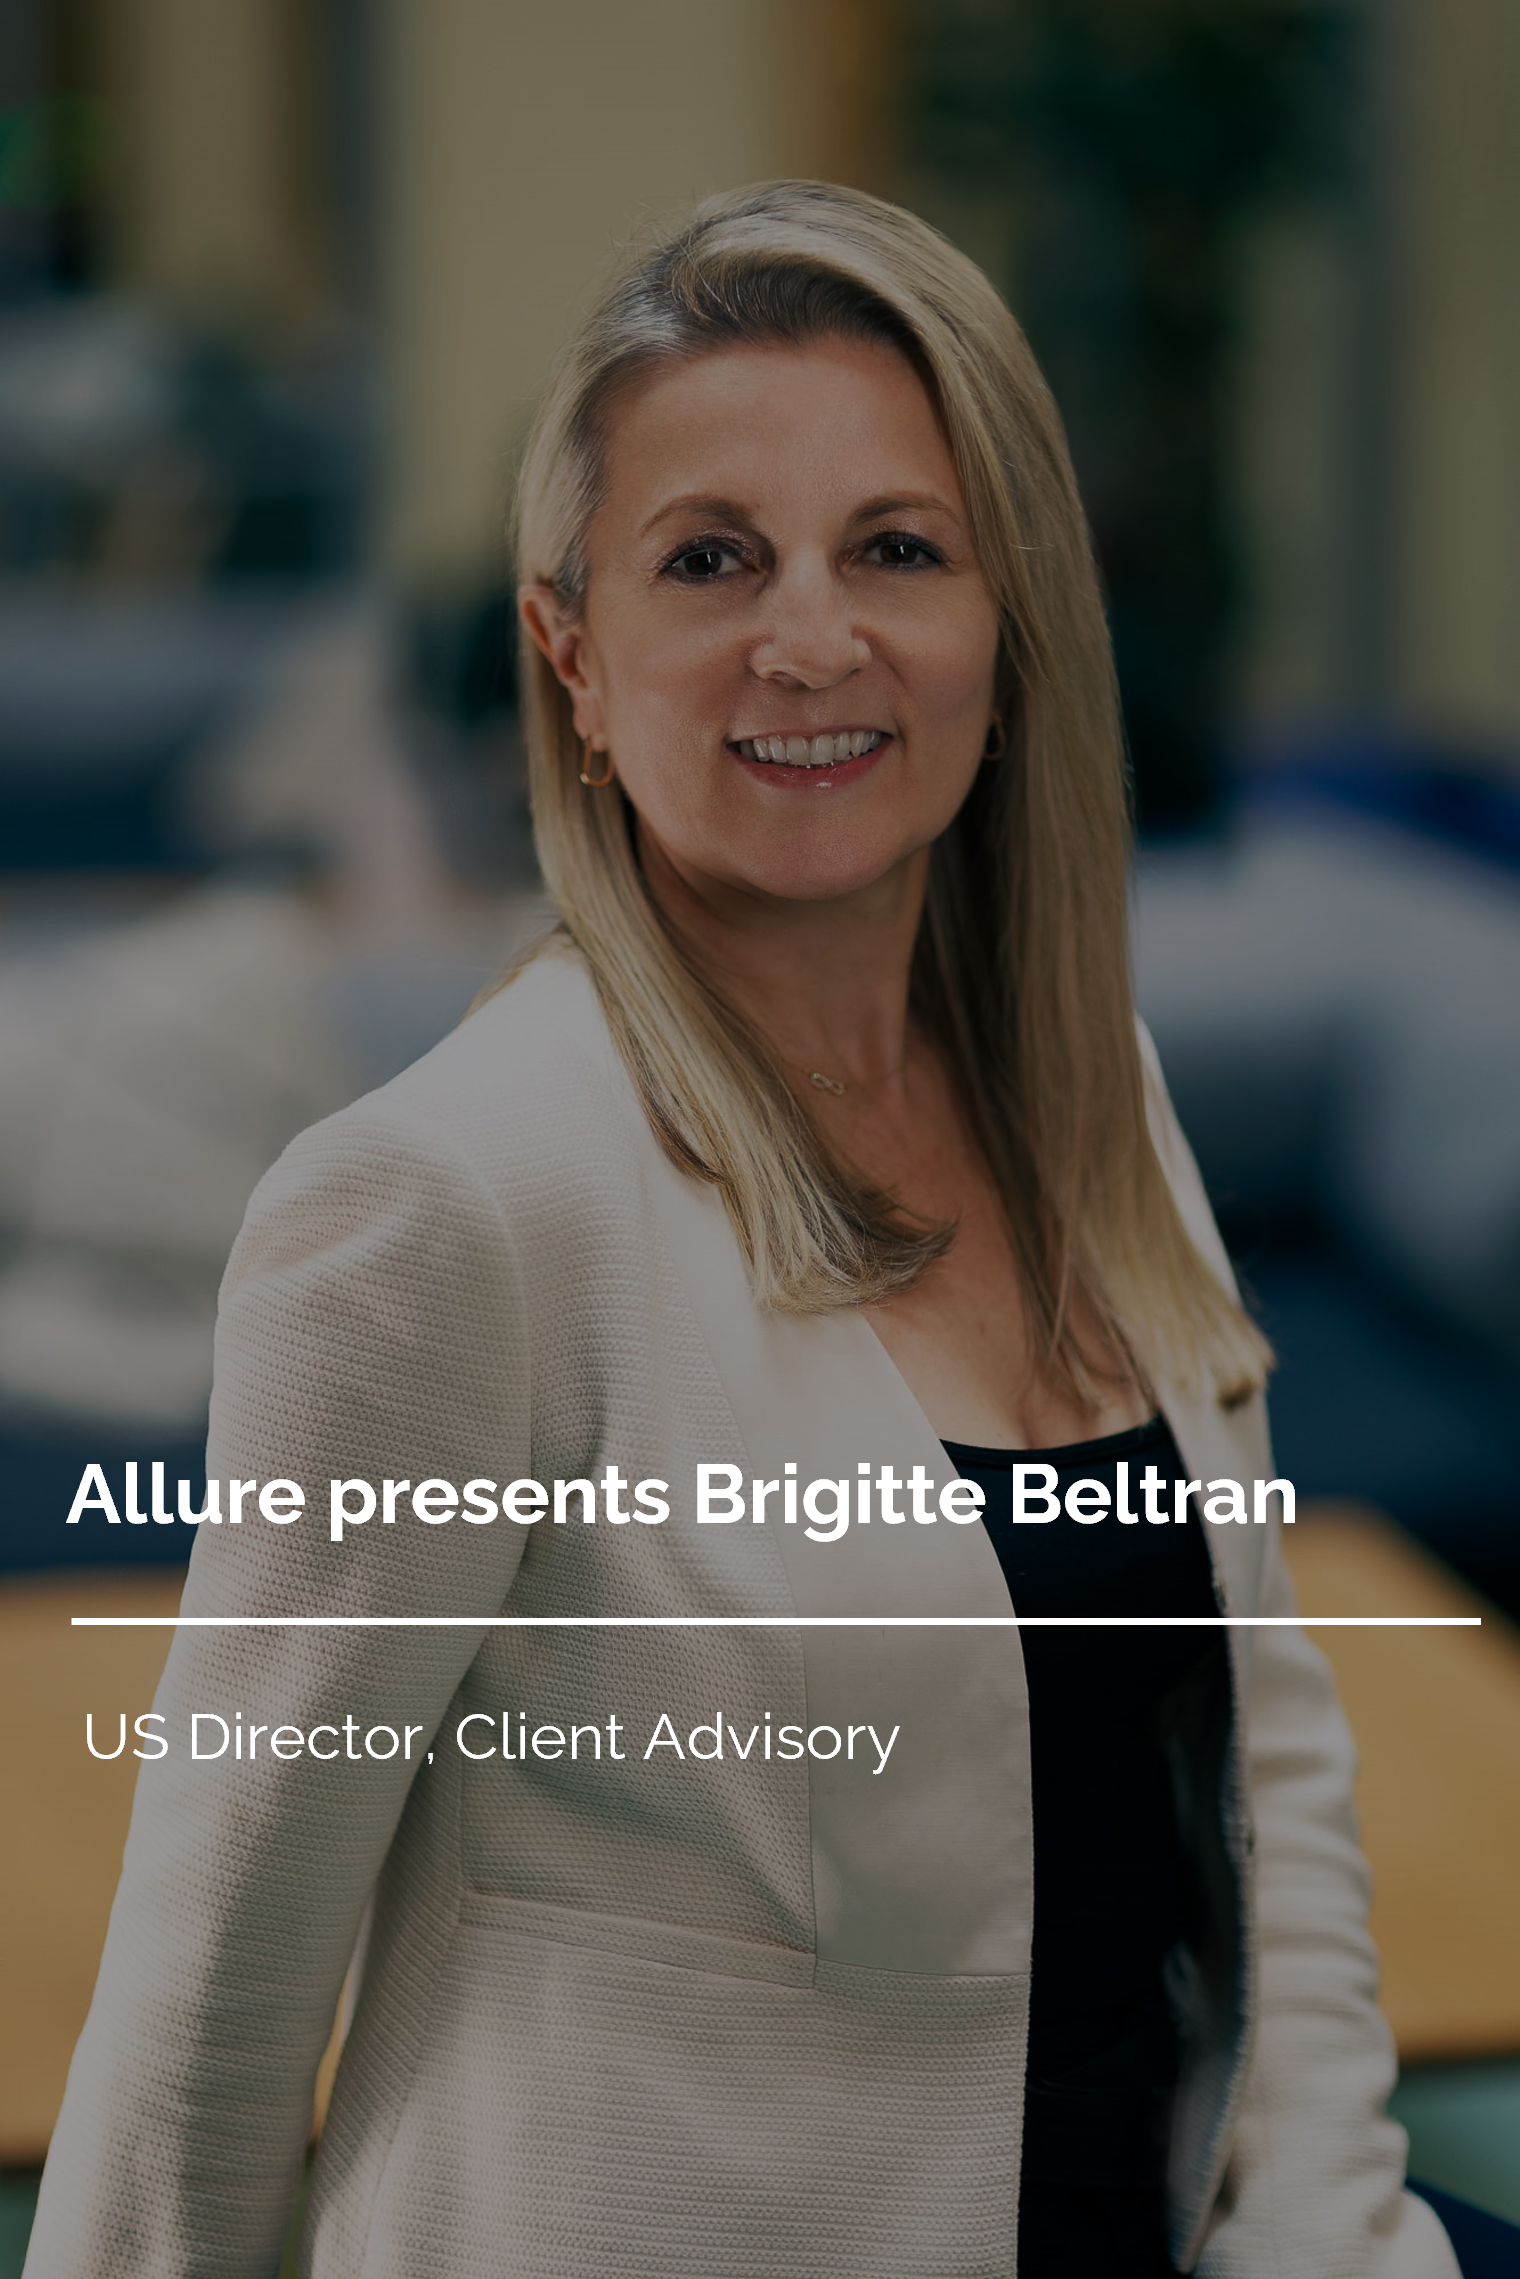 Allure presents Brigitte Beltran